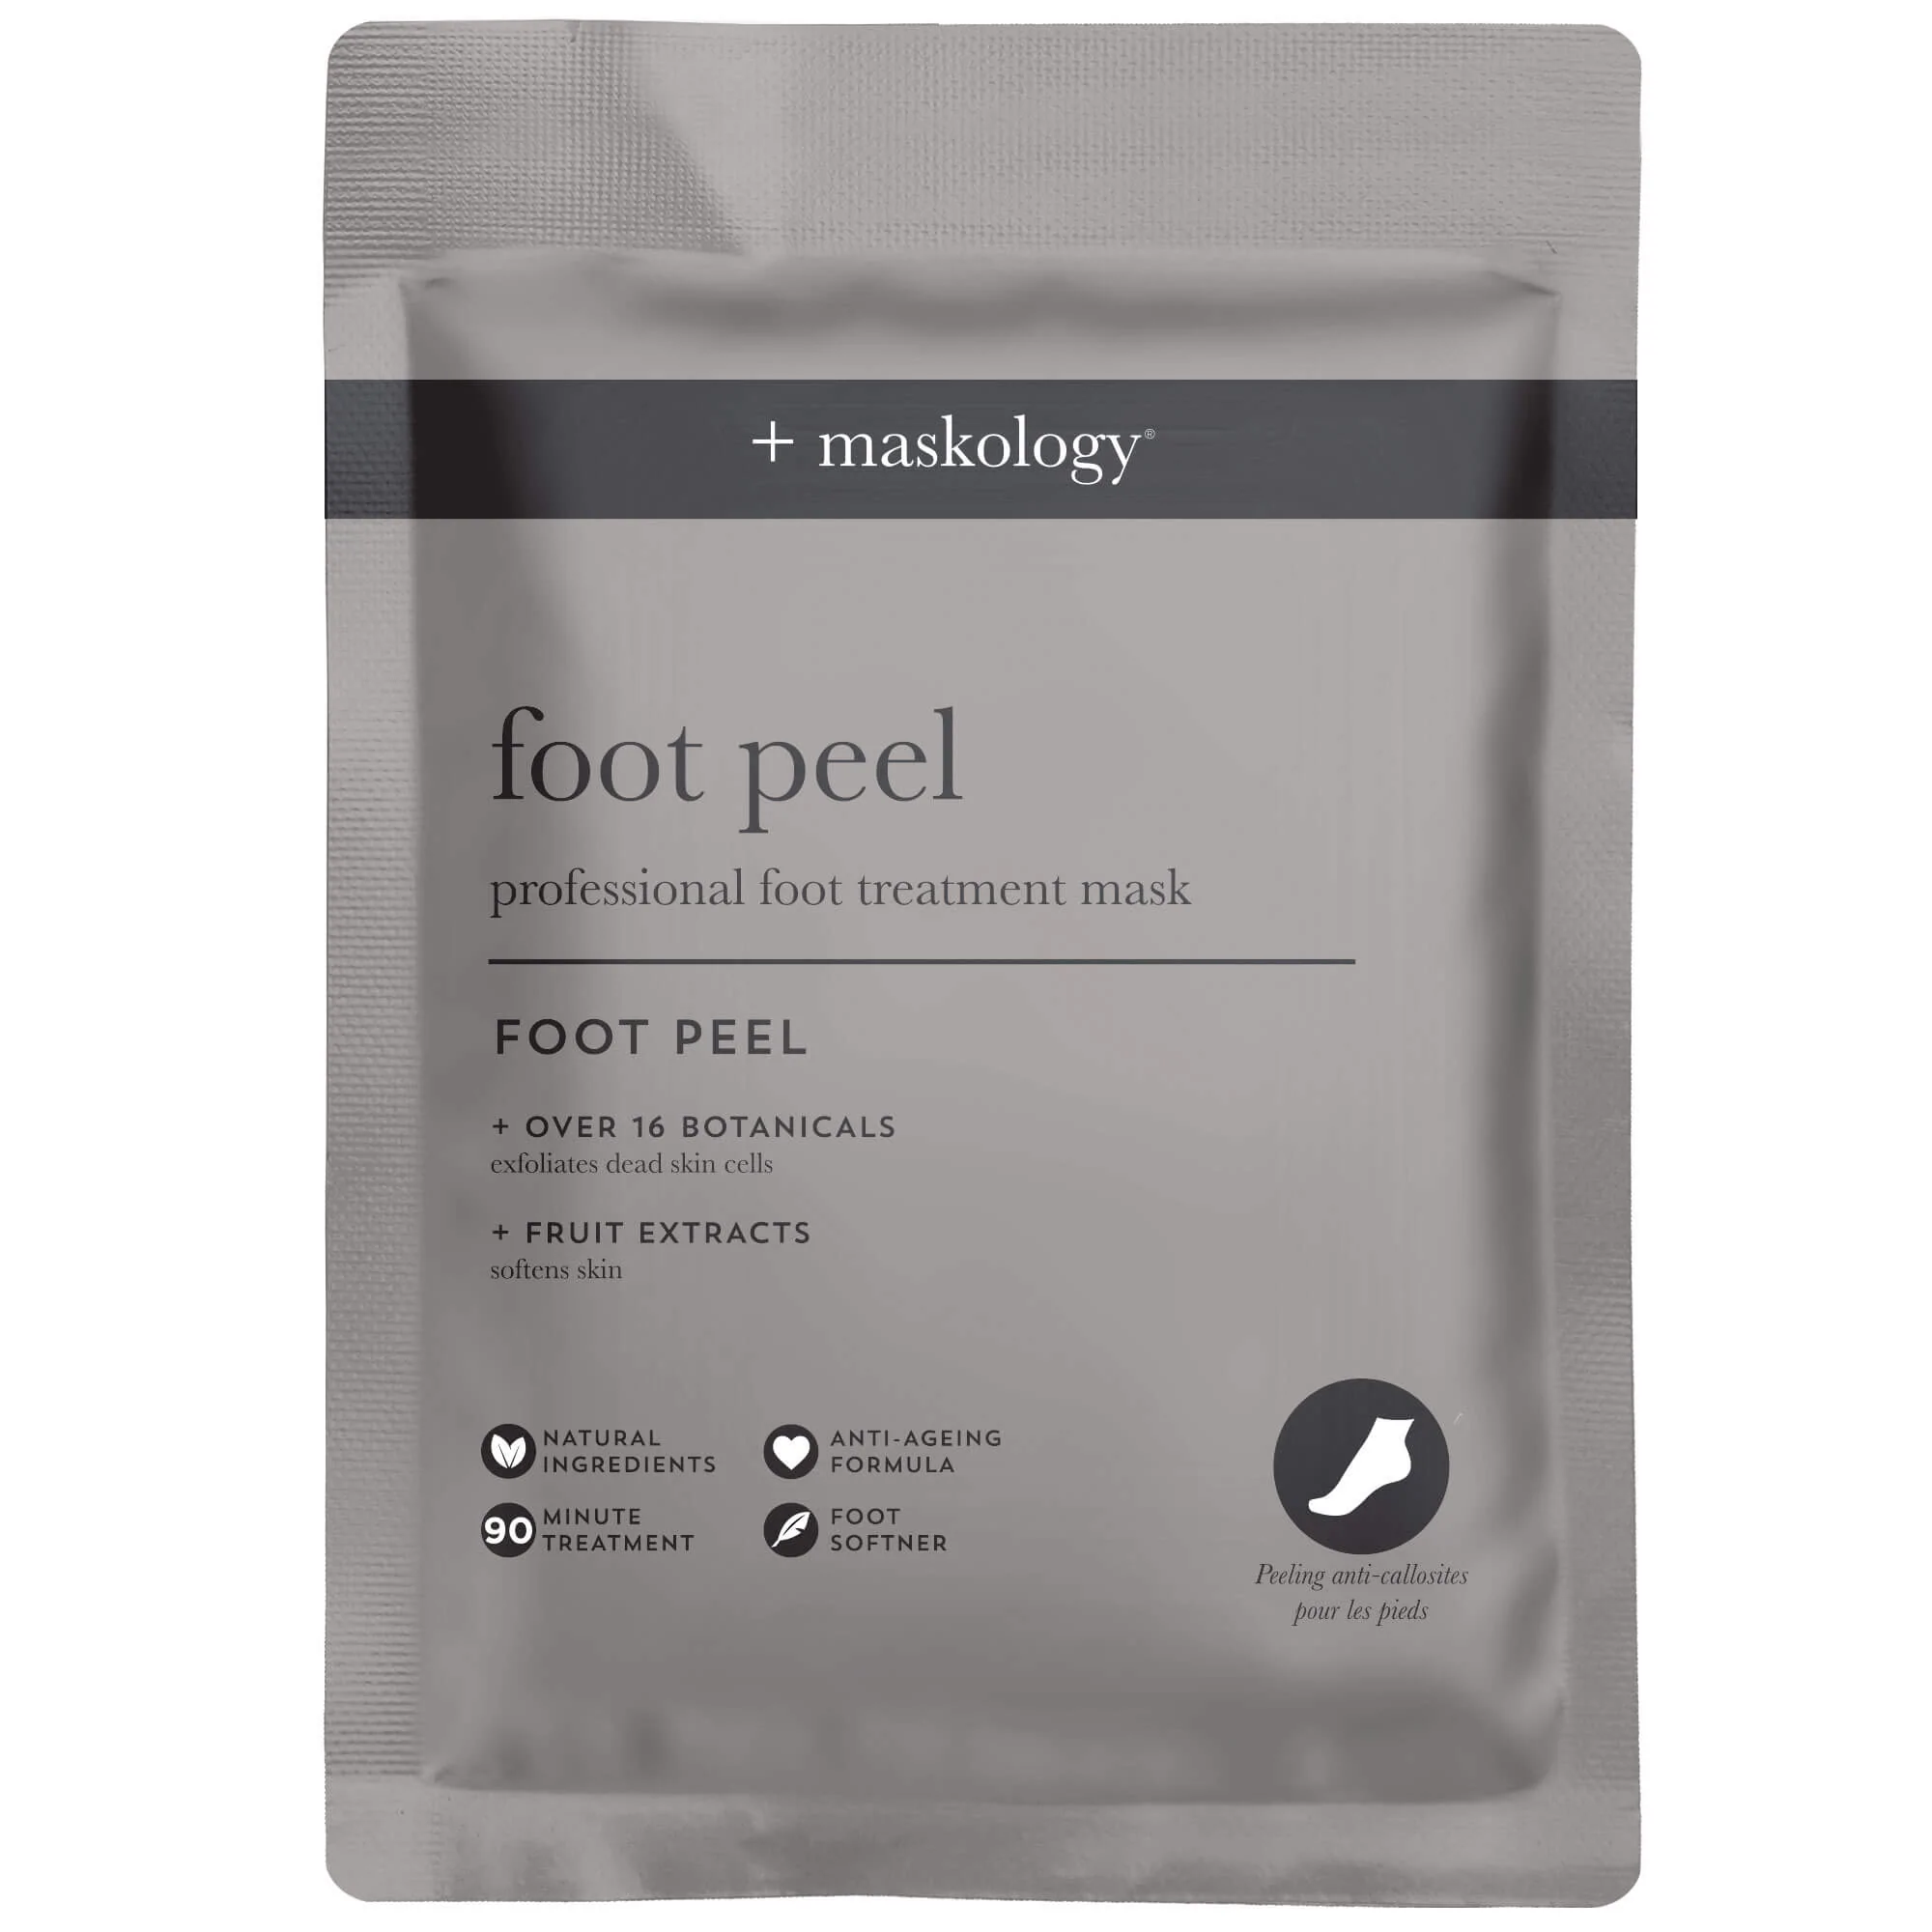 Maskology Foot Peel – Professional Foot Treatment Mask